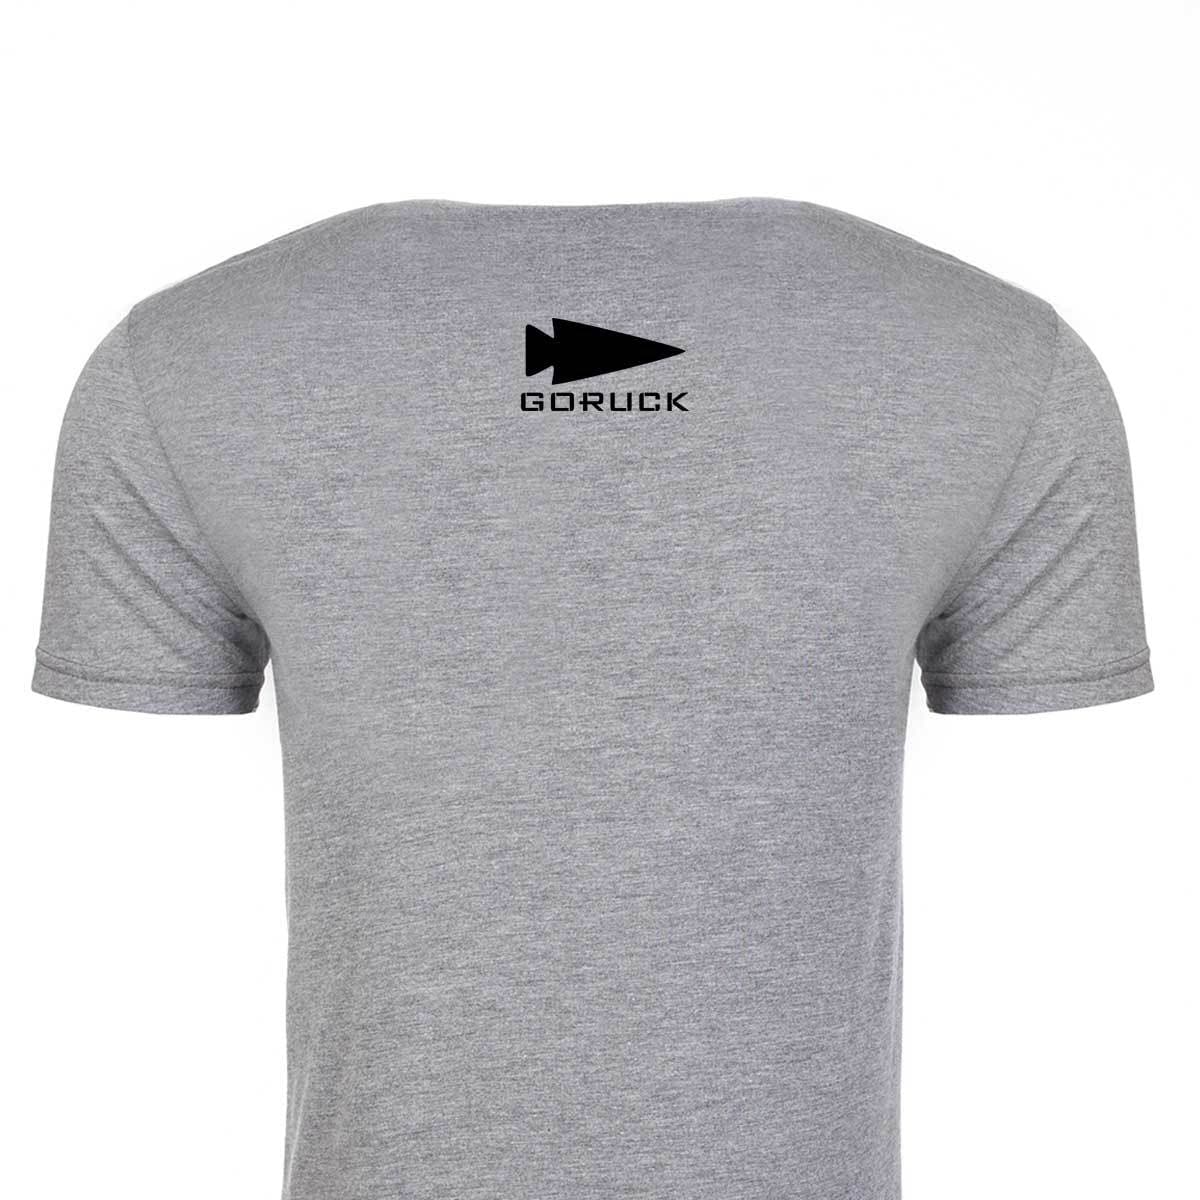 T-shirt - GORUCK USA (Black & Grey)